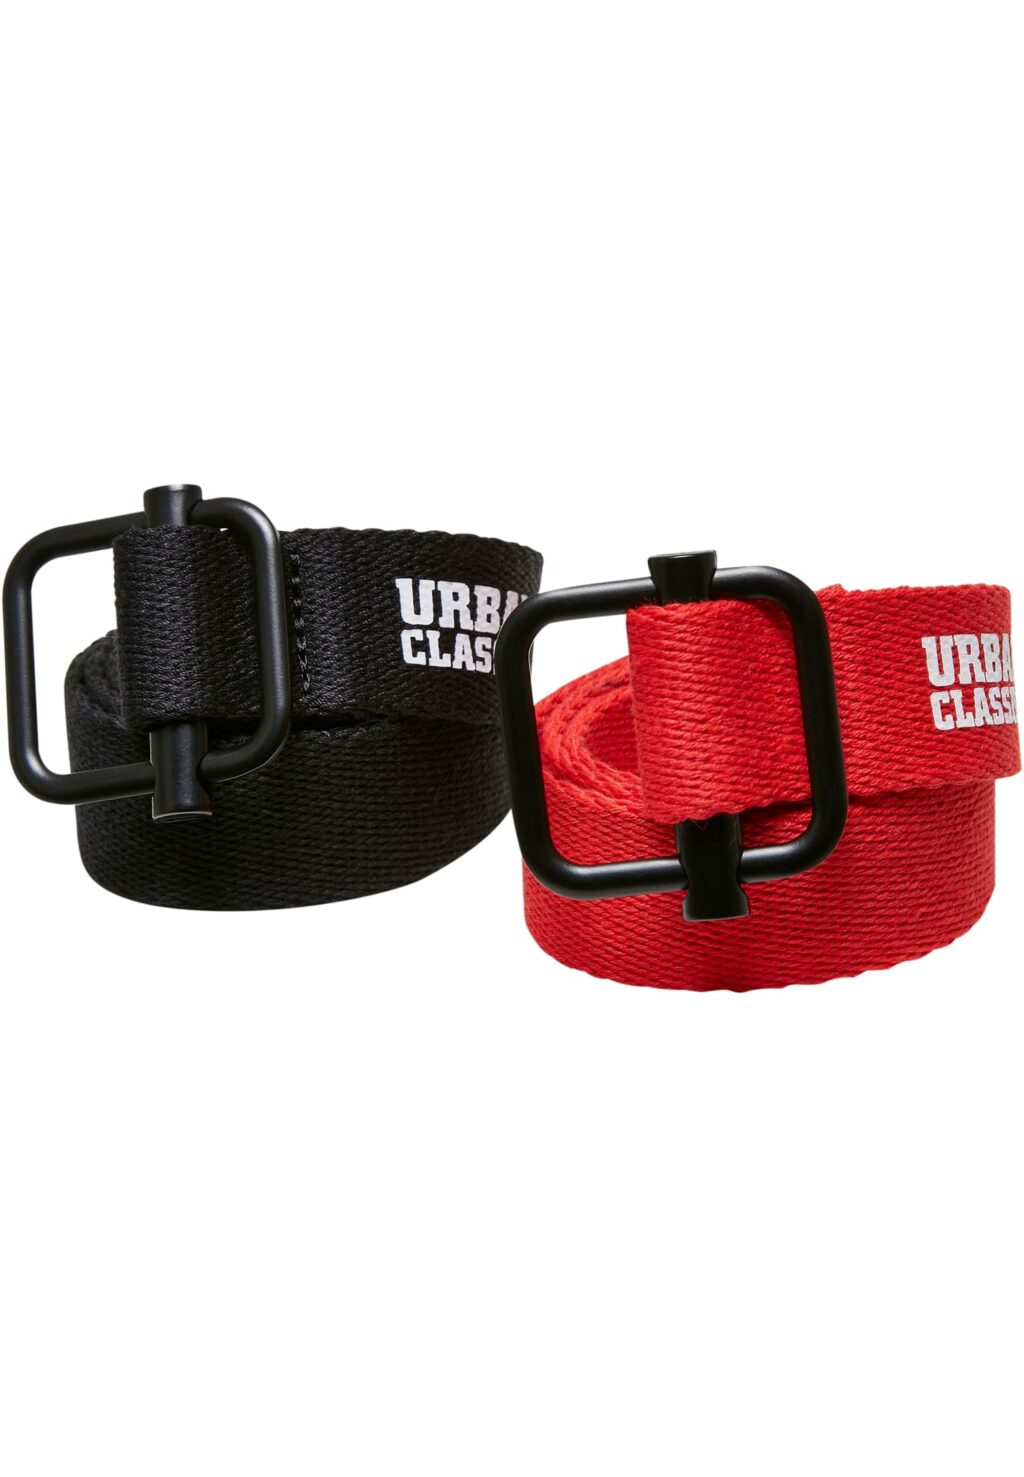 Industrial Canvas Belt Kids 2-Pack black/red one UCK4294